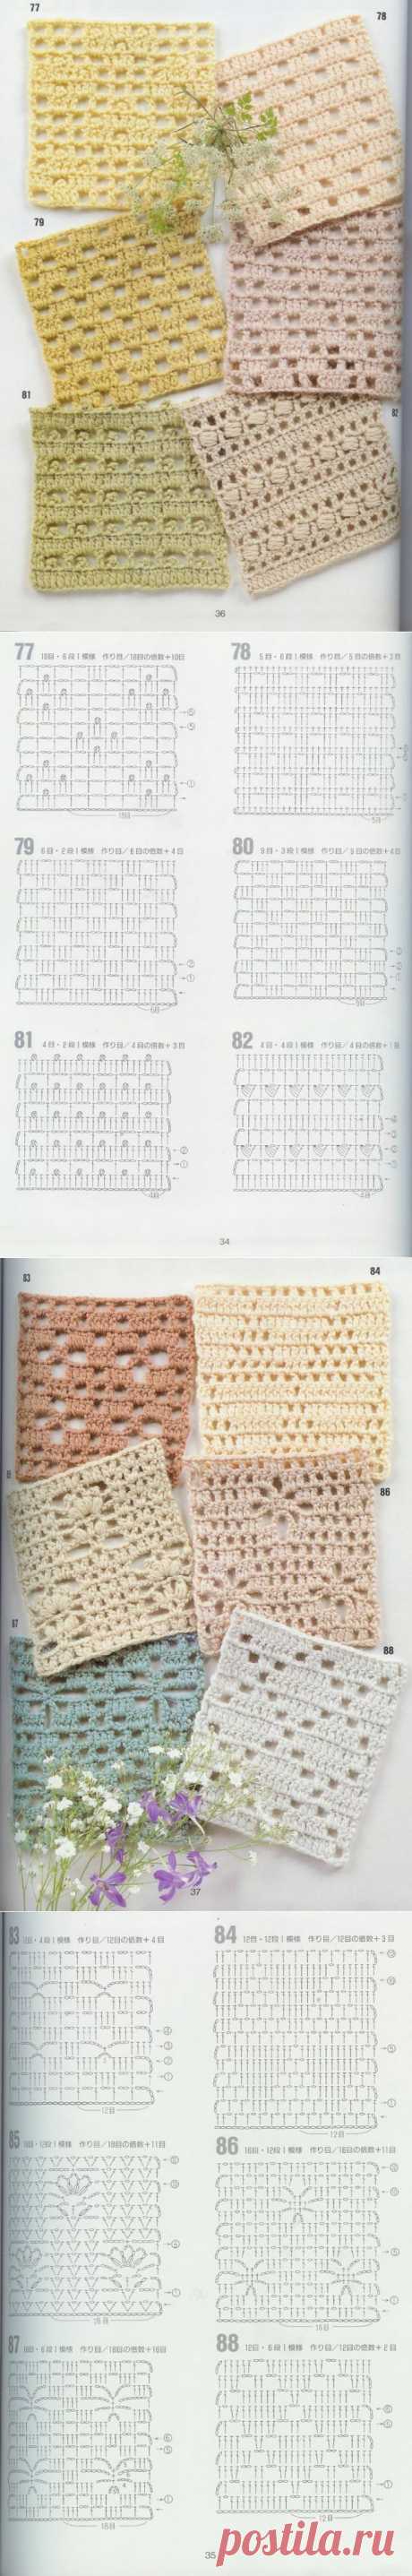 Crochet patterns | Free patterns